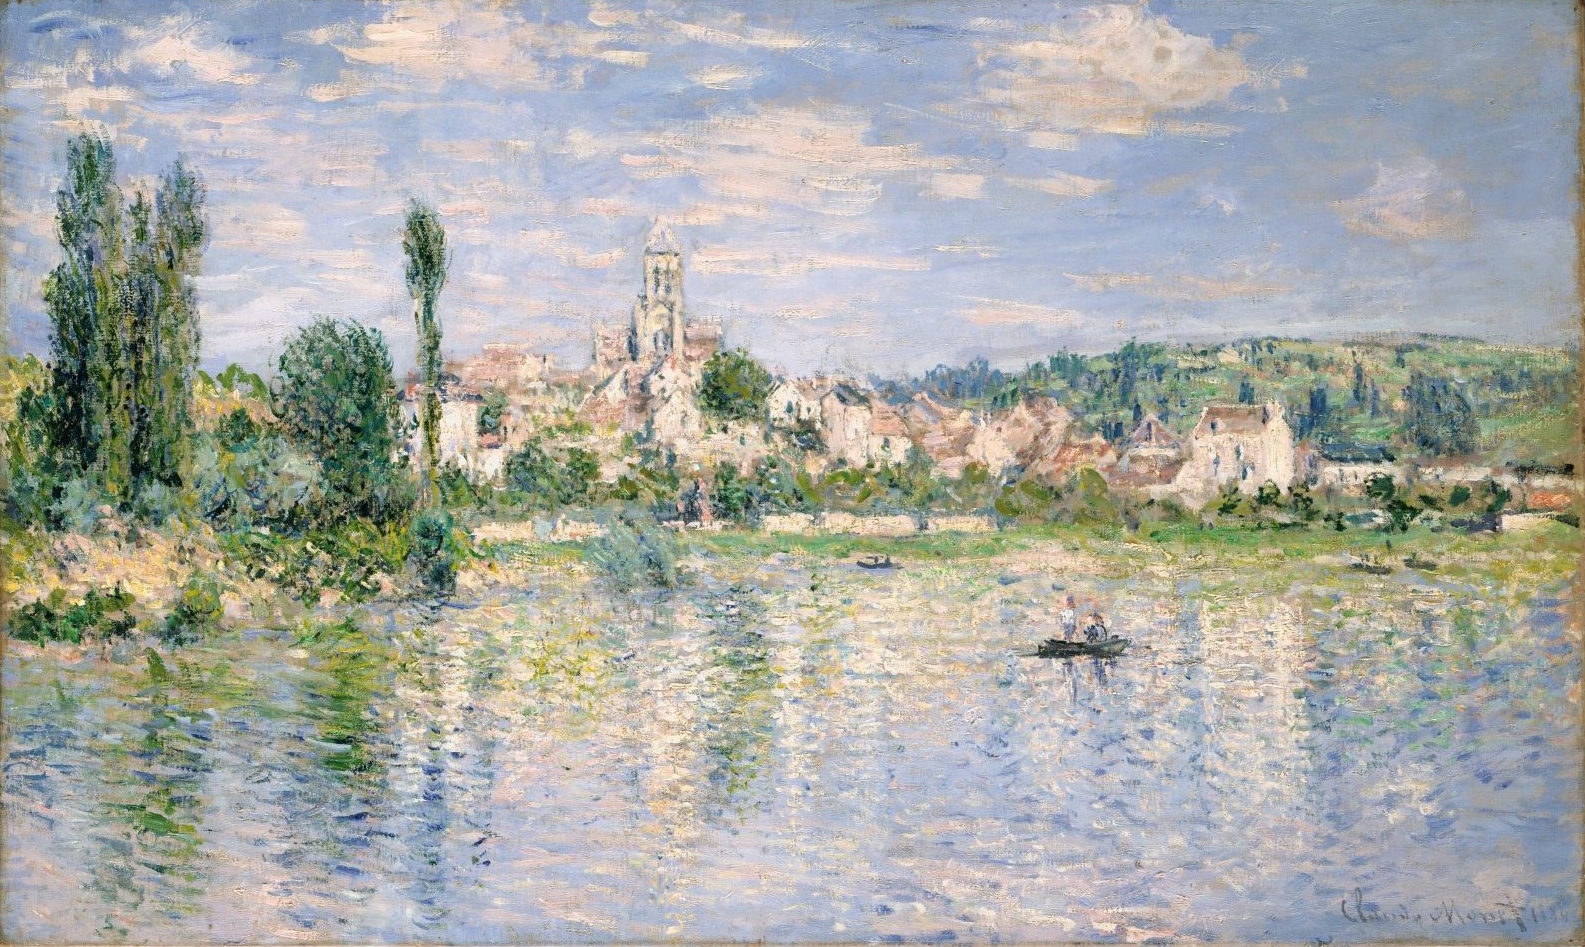 Claude+Monet-1840-1926 (942).jpg